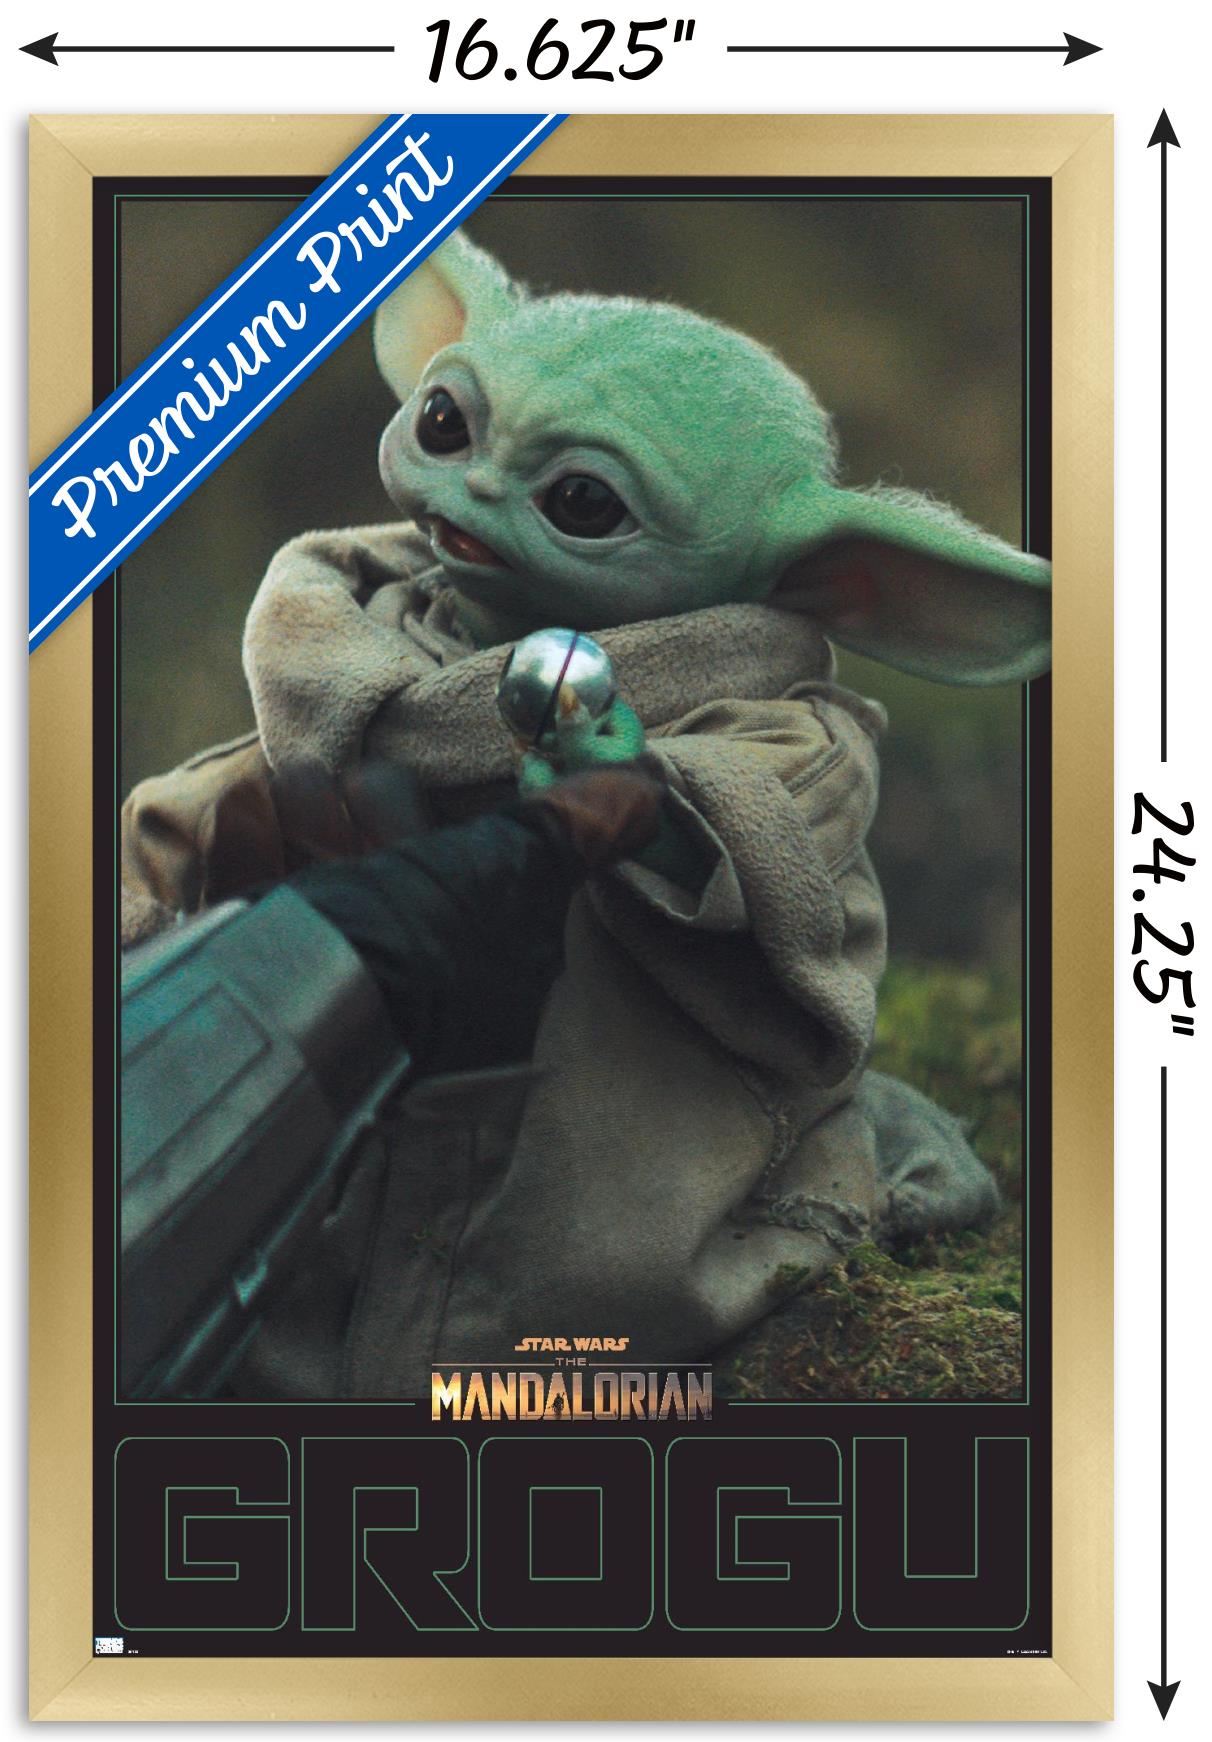 Star Wars The Mandalorian Season 2 - Grogu Wall Poster, 14.725" x 22.375", Framed - image 3 of 5